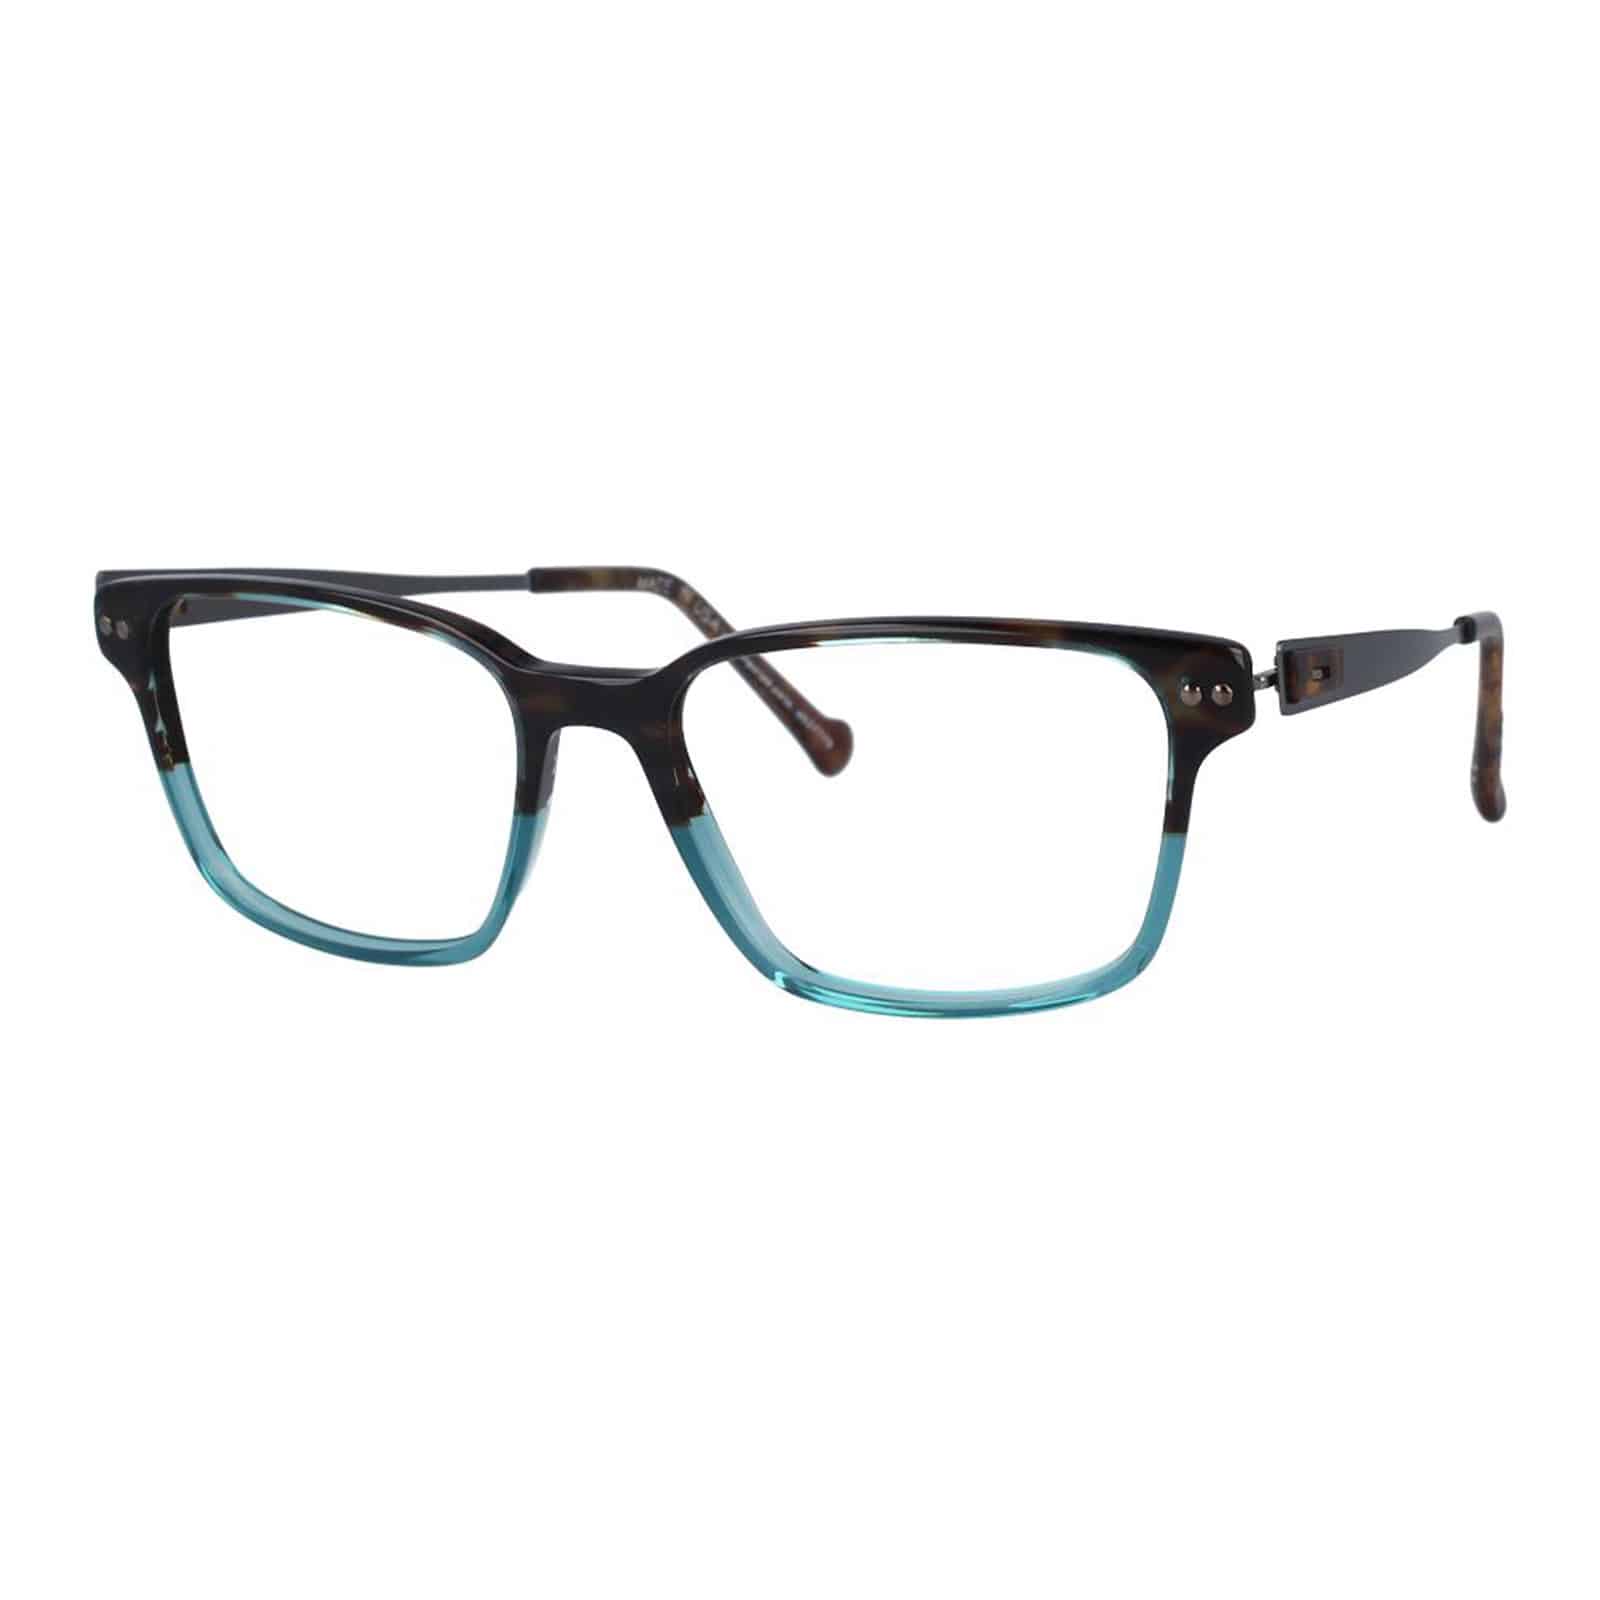 iGreen Frames Hi-Tech Eyewear - Volunteer Eyecare